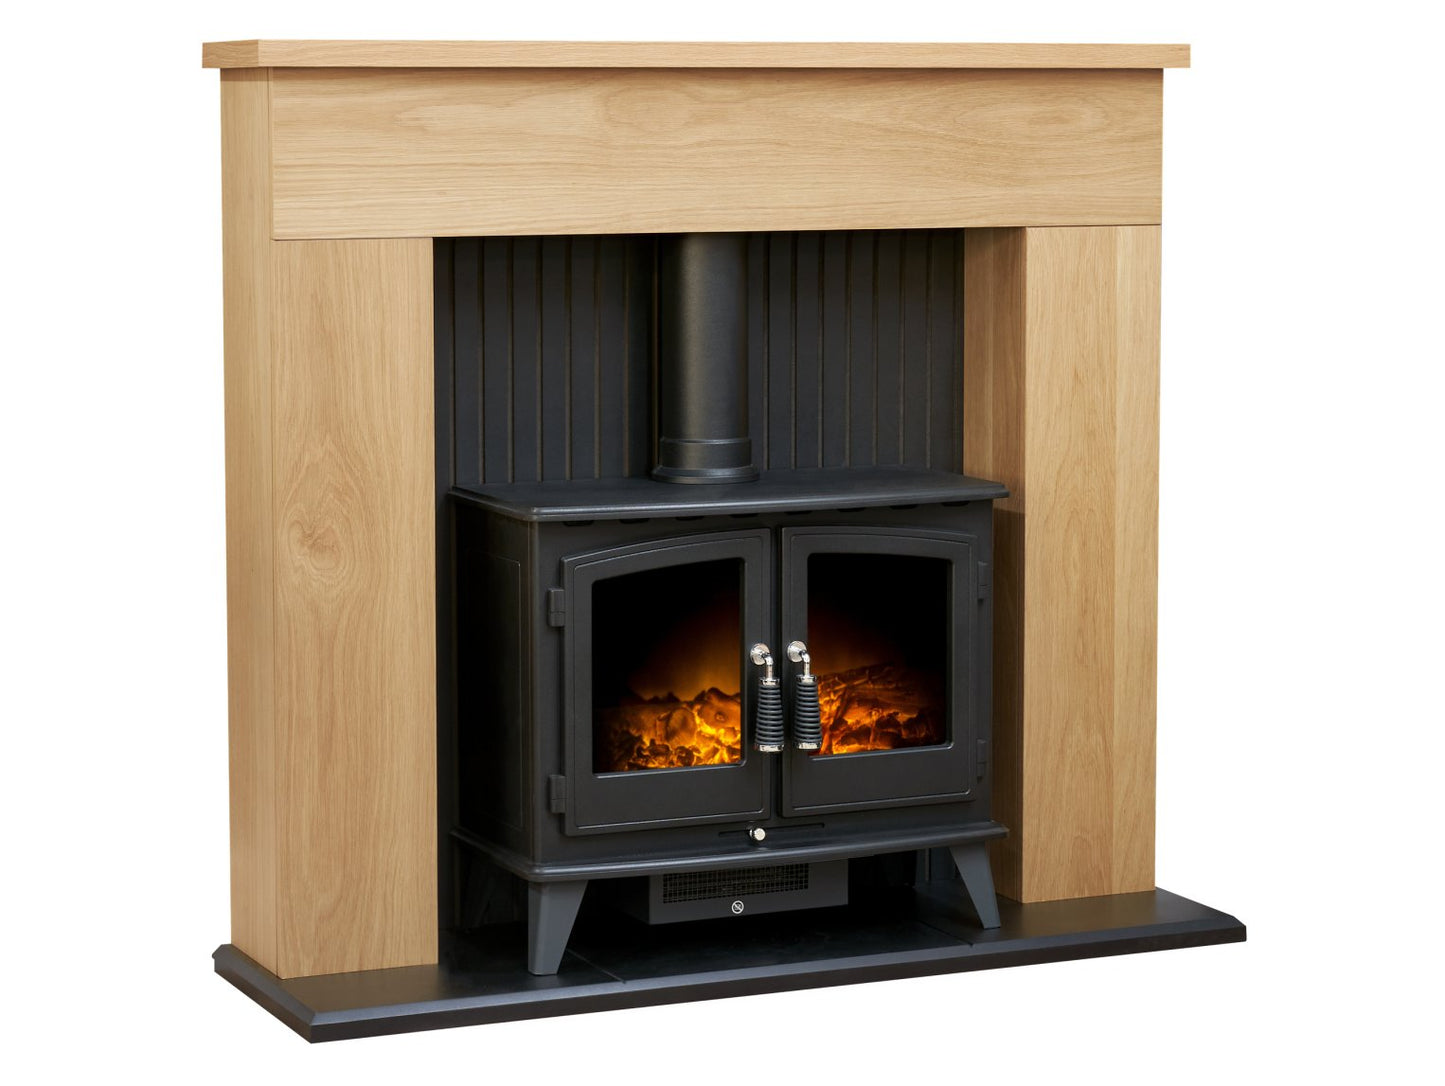 Adam Innsbruck Stove Fireplace Oak + Woodhouse Electric Stove Black, 48"